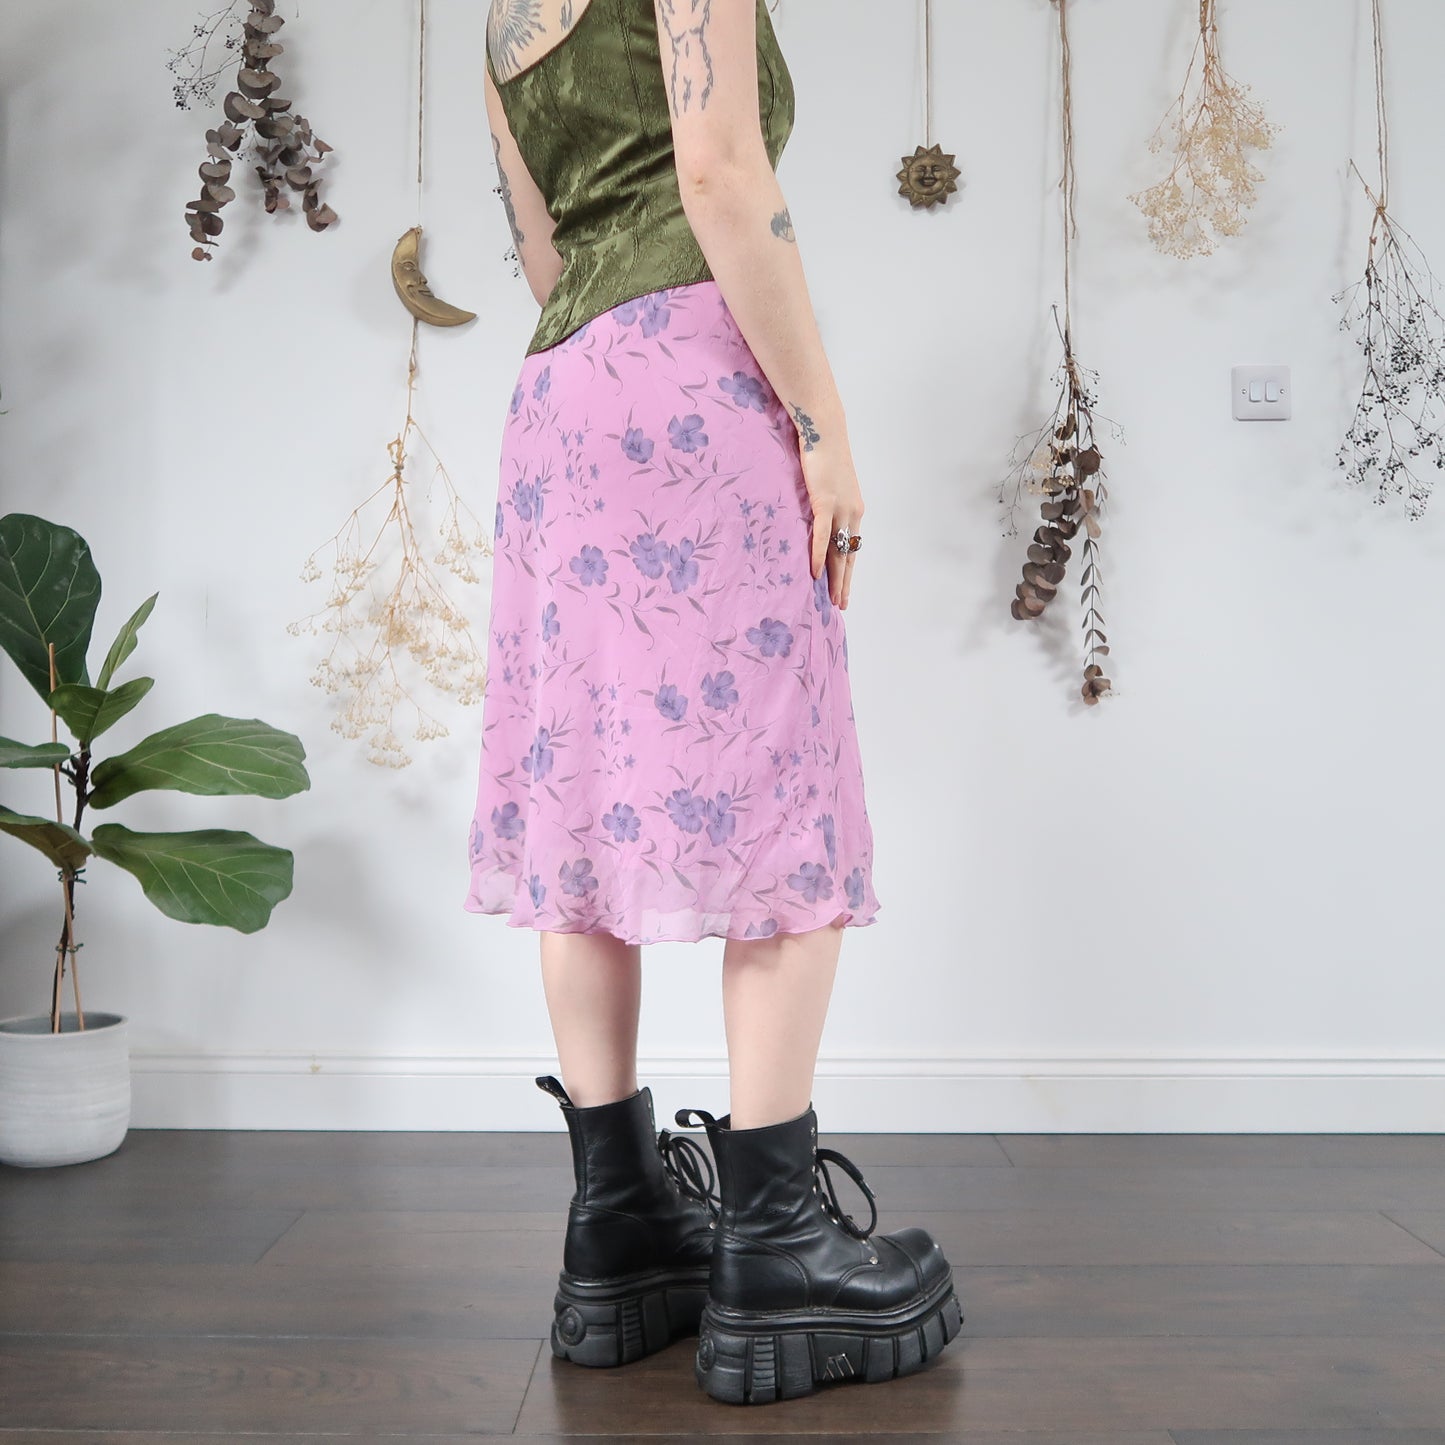 Silk floral skirt - size M/L